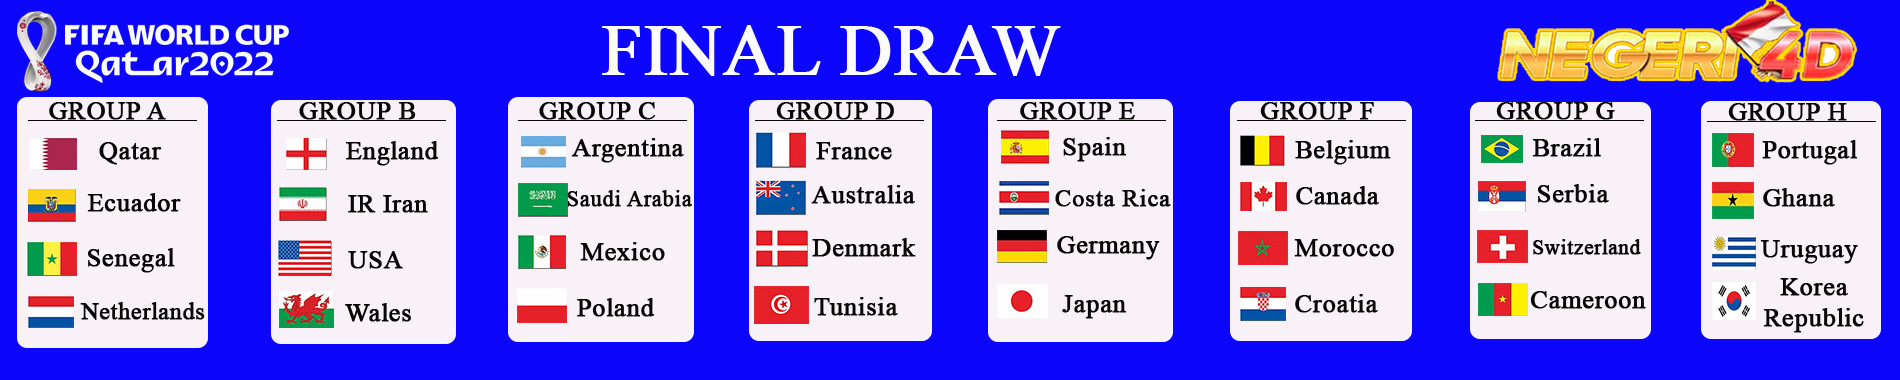 Final draw piala dunia, Negeri4d